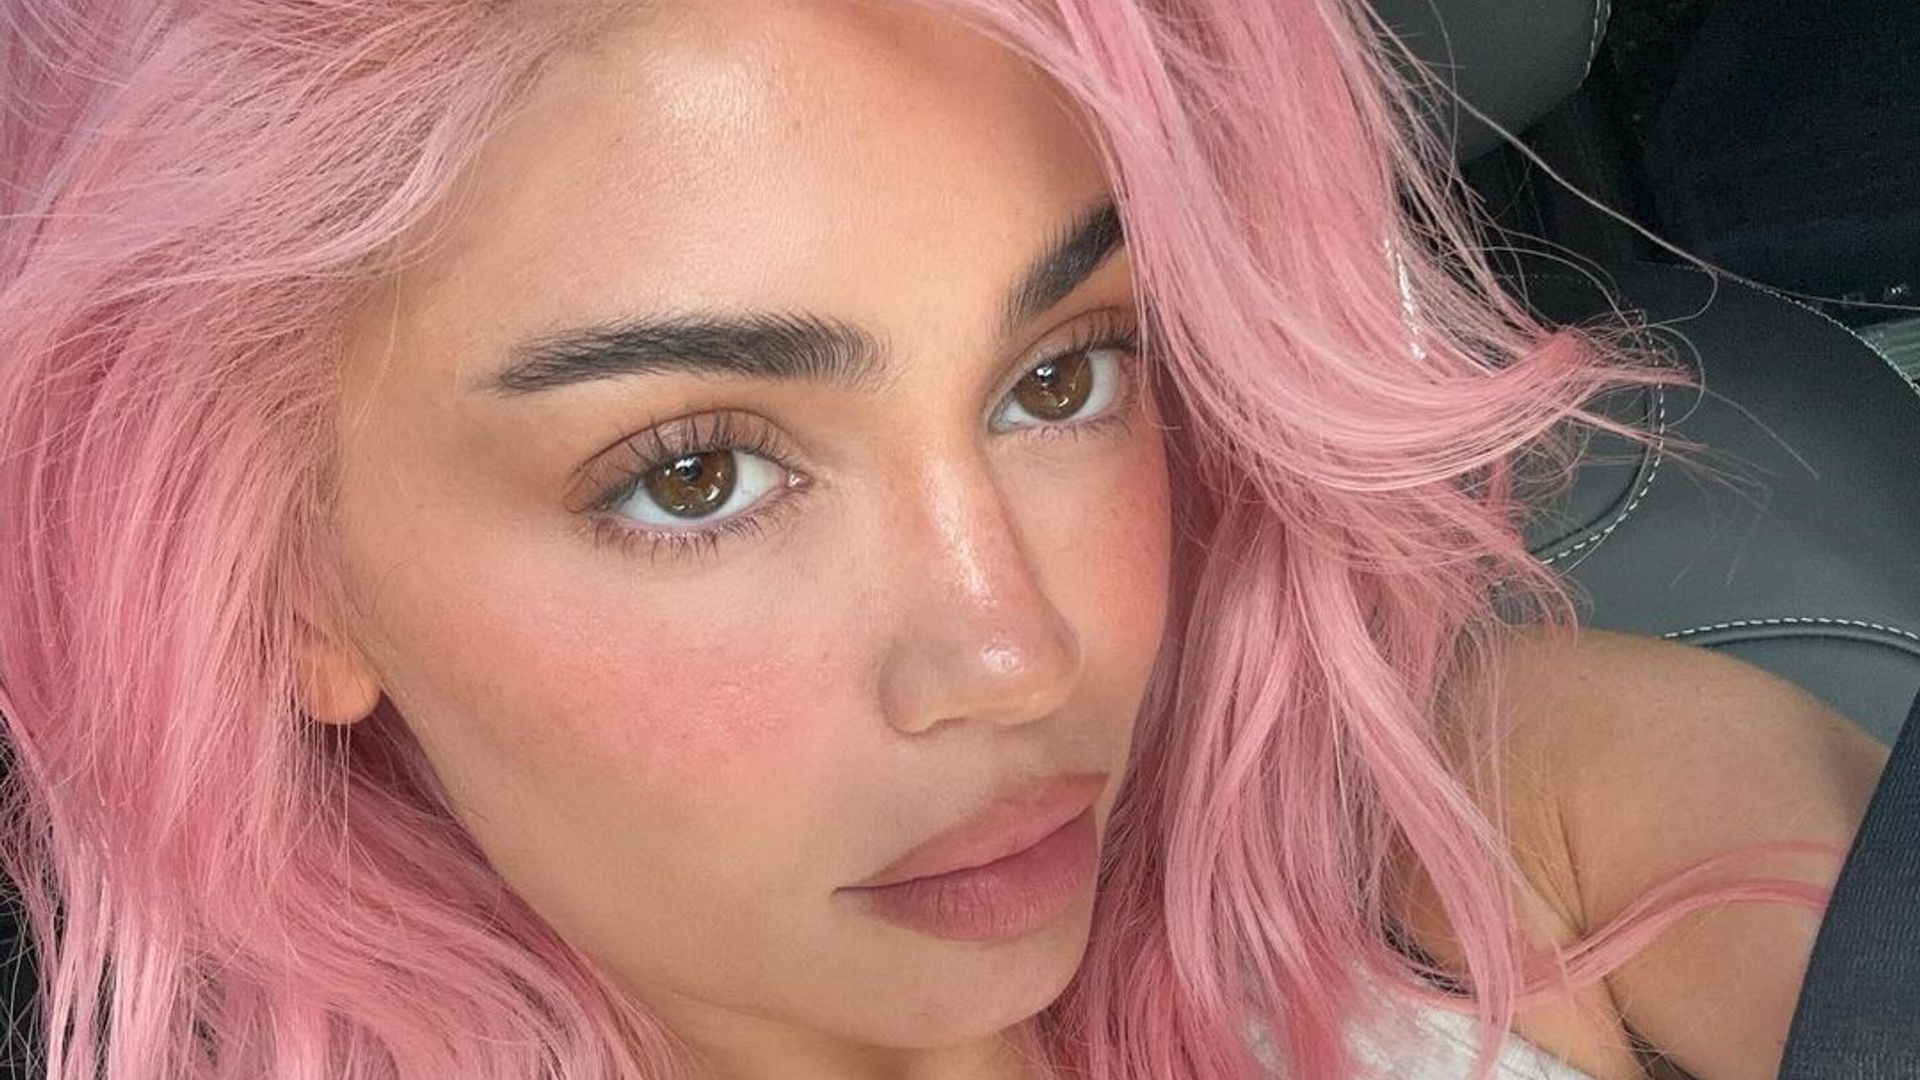 Kylie Jenner's bubblegum pink look